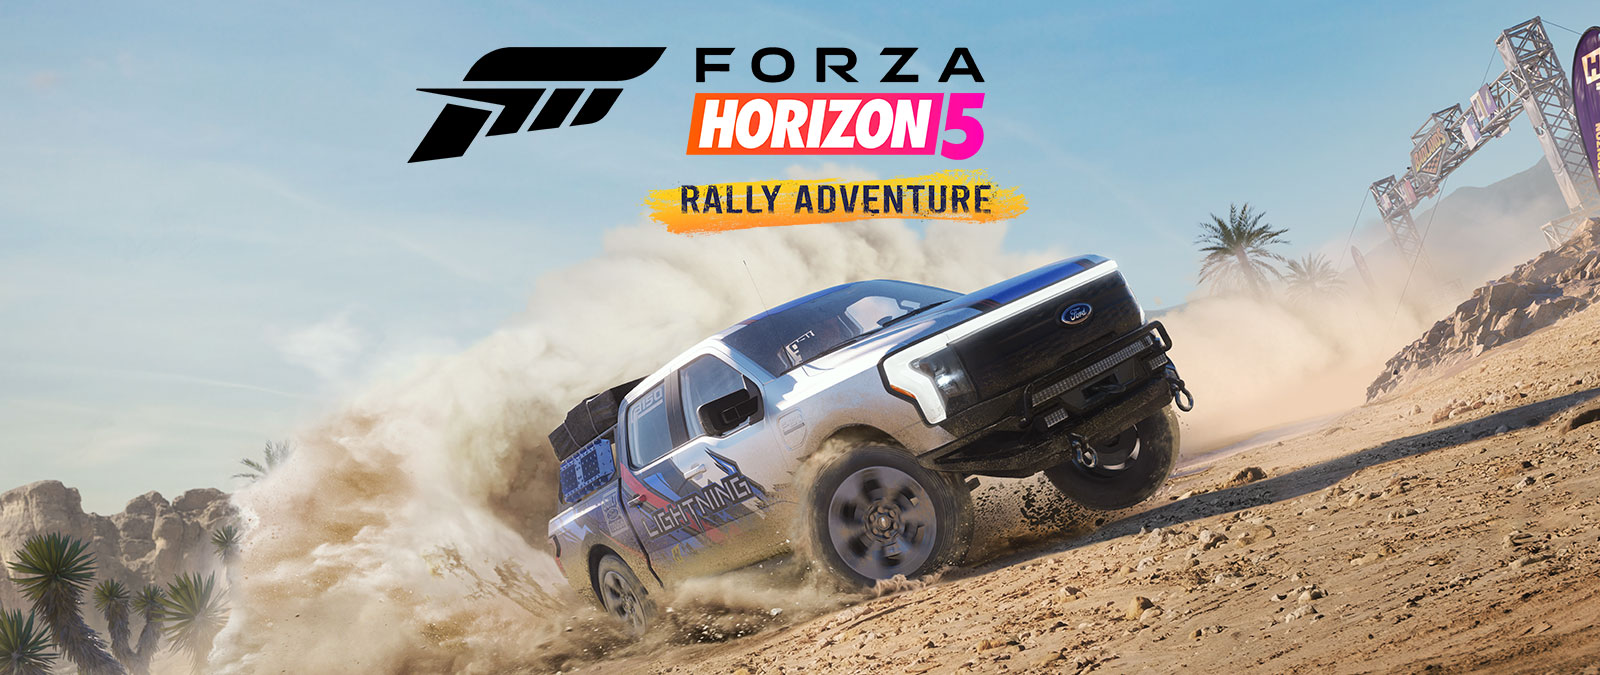 Forza-logo, Forza Horizon 5, Rally Adventure, een Ford 150 Lightning jaagt stof op een onverharde weg op.